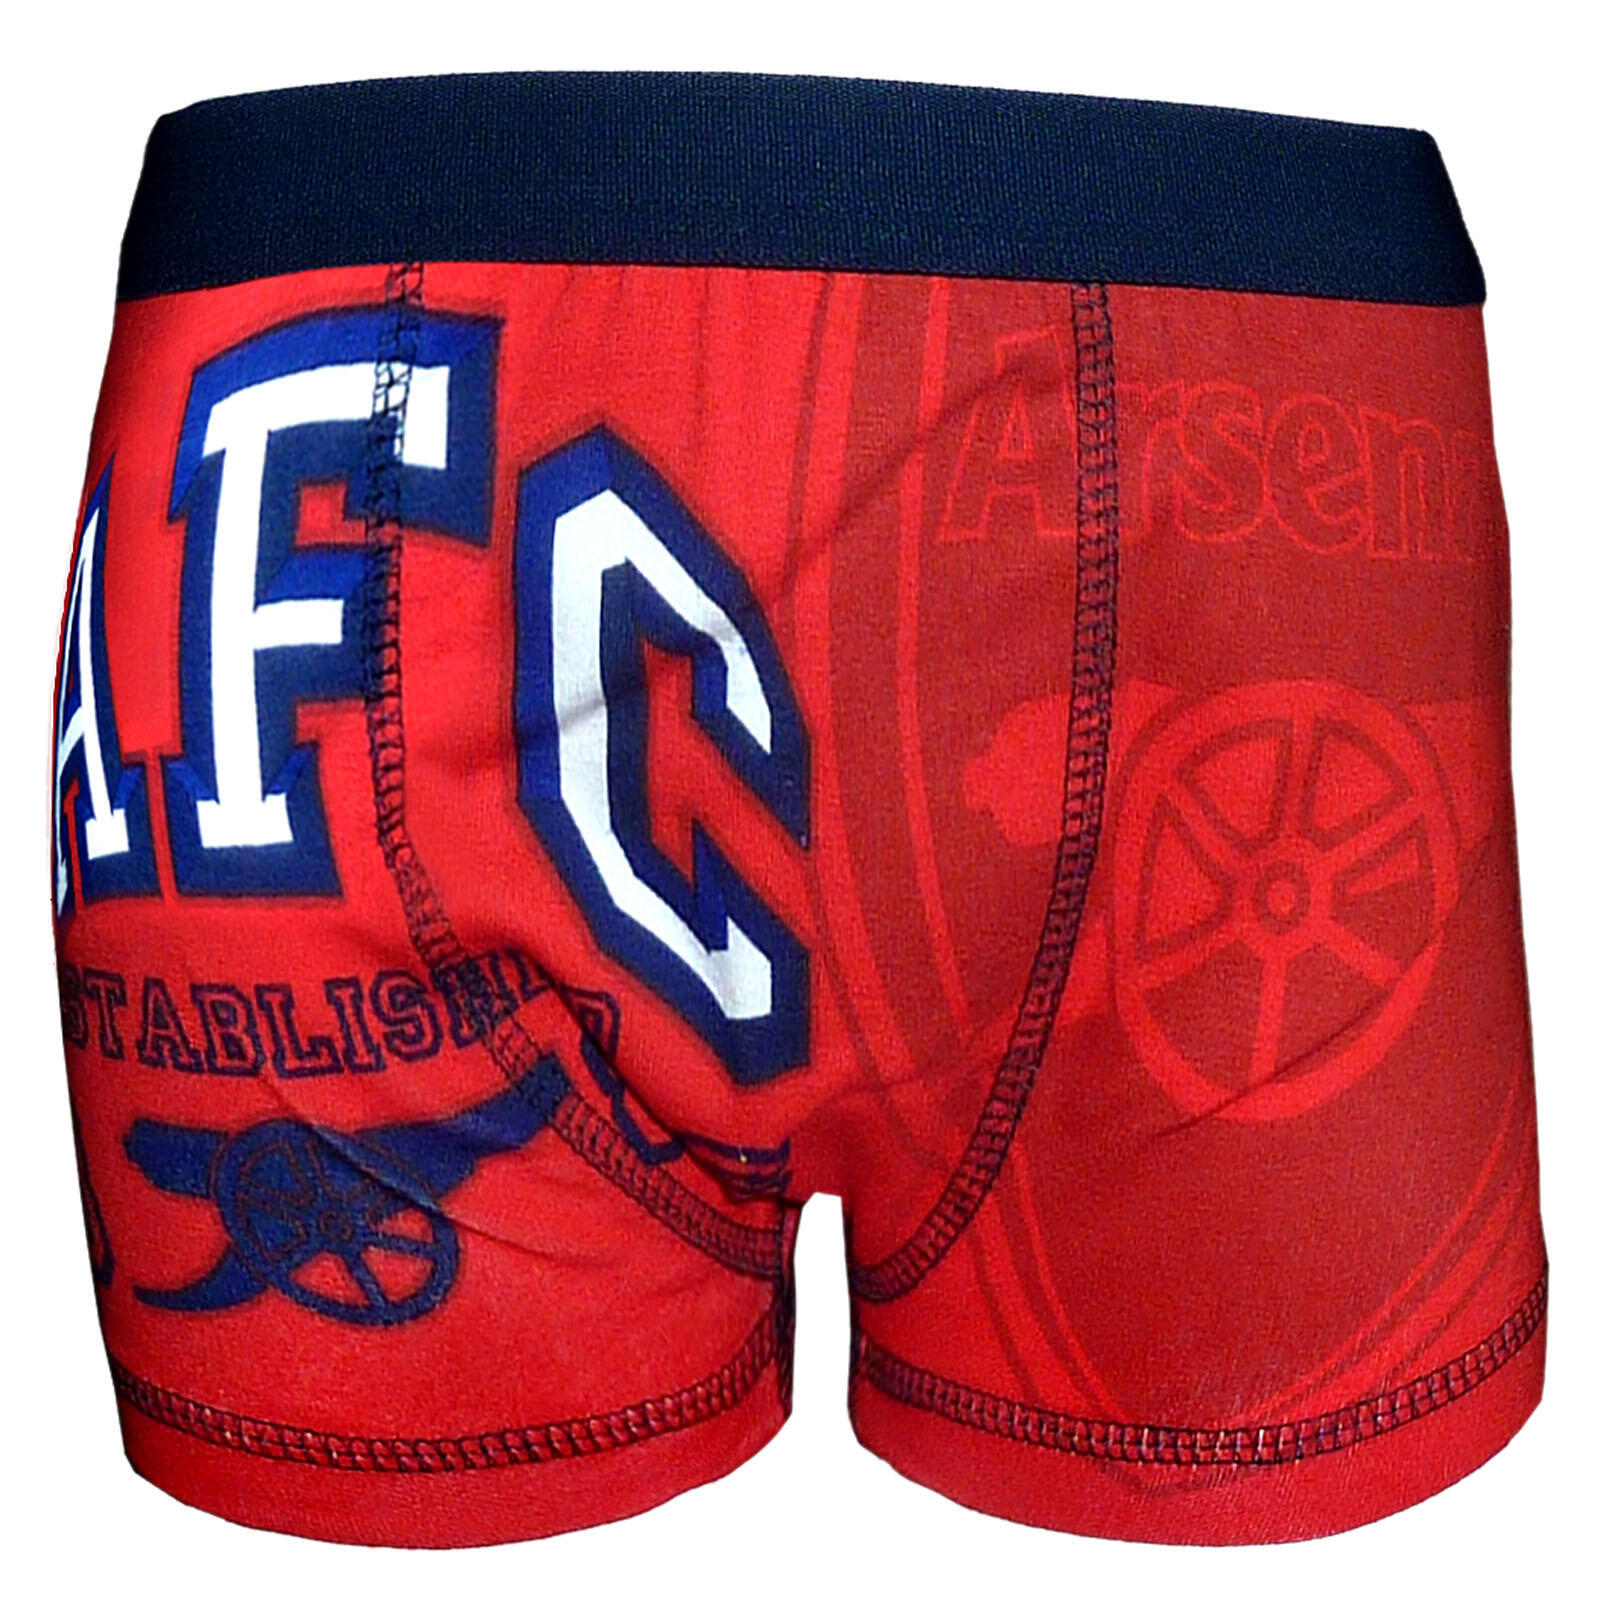 ARSENAL Arsenal FC Boys Boxer Shorts 1 Pack OFFICIAL Football Gift